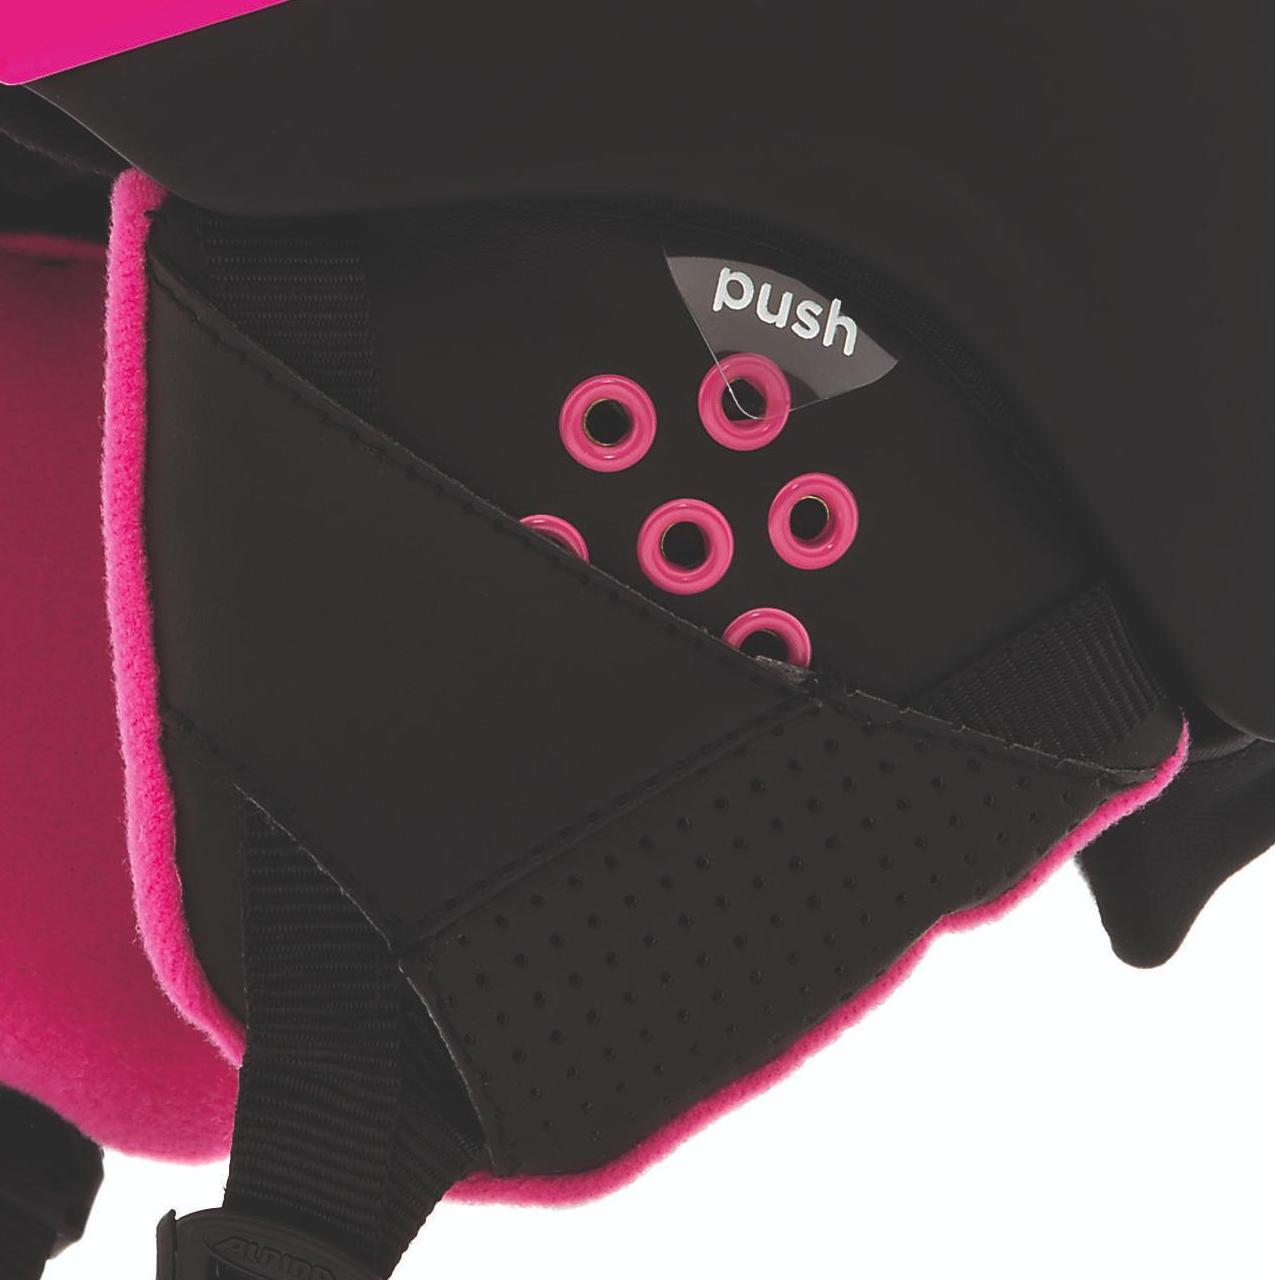 Зимний Шлем Alpina CHEOS pink-black matt